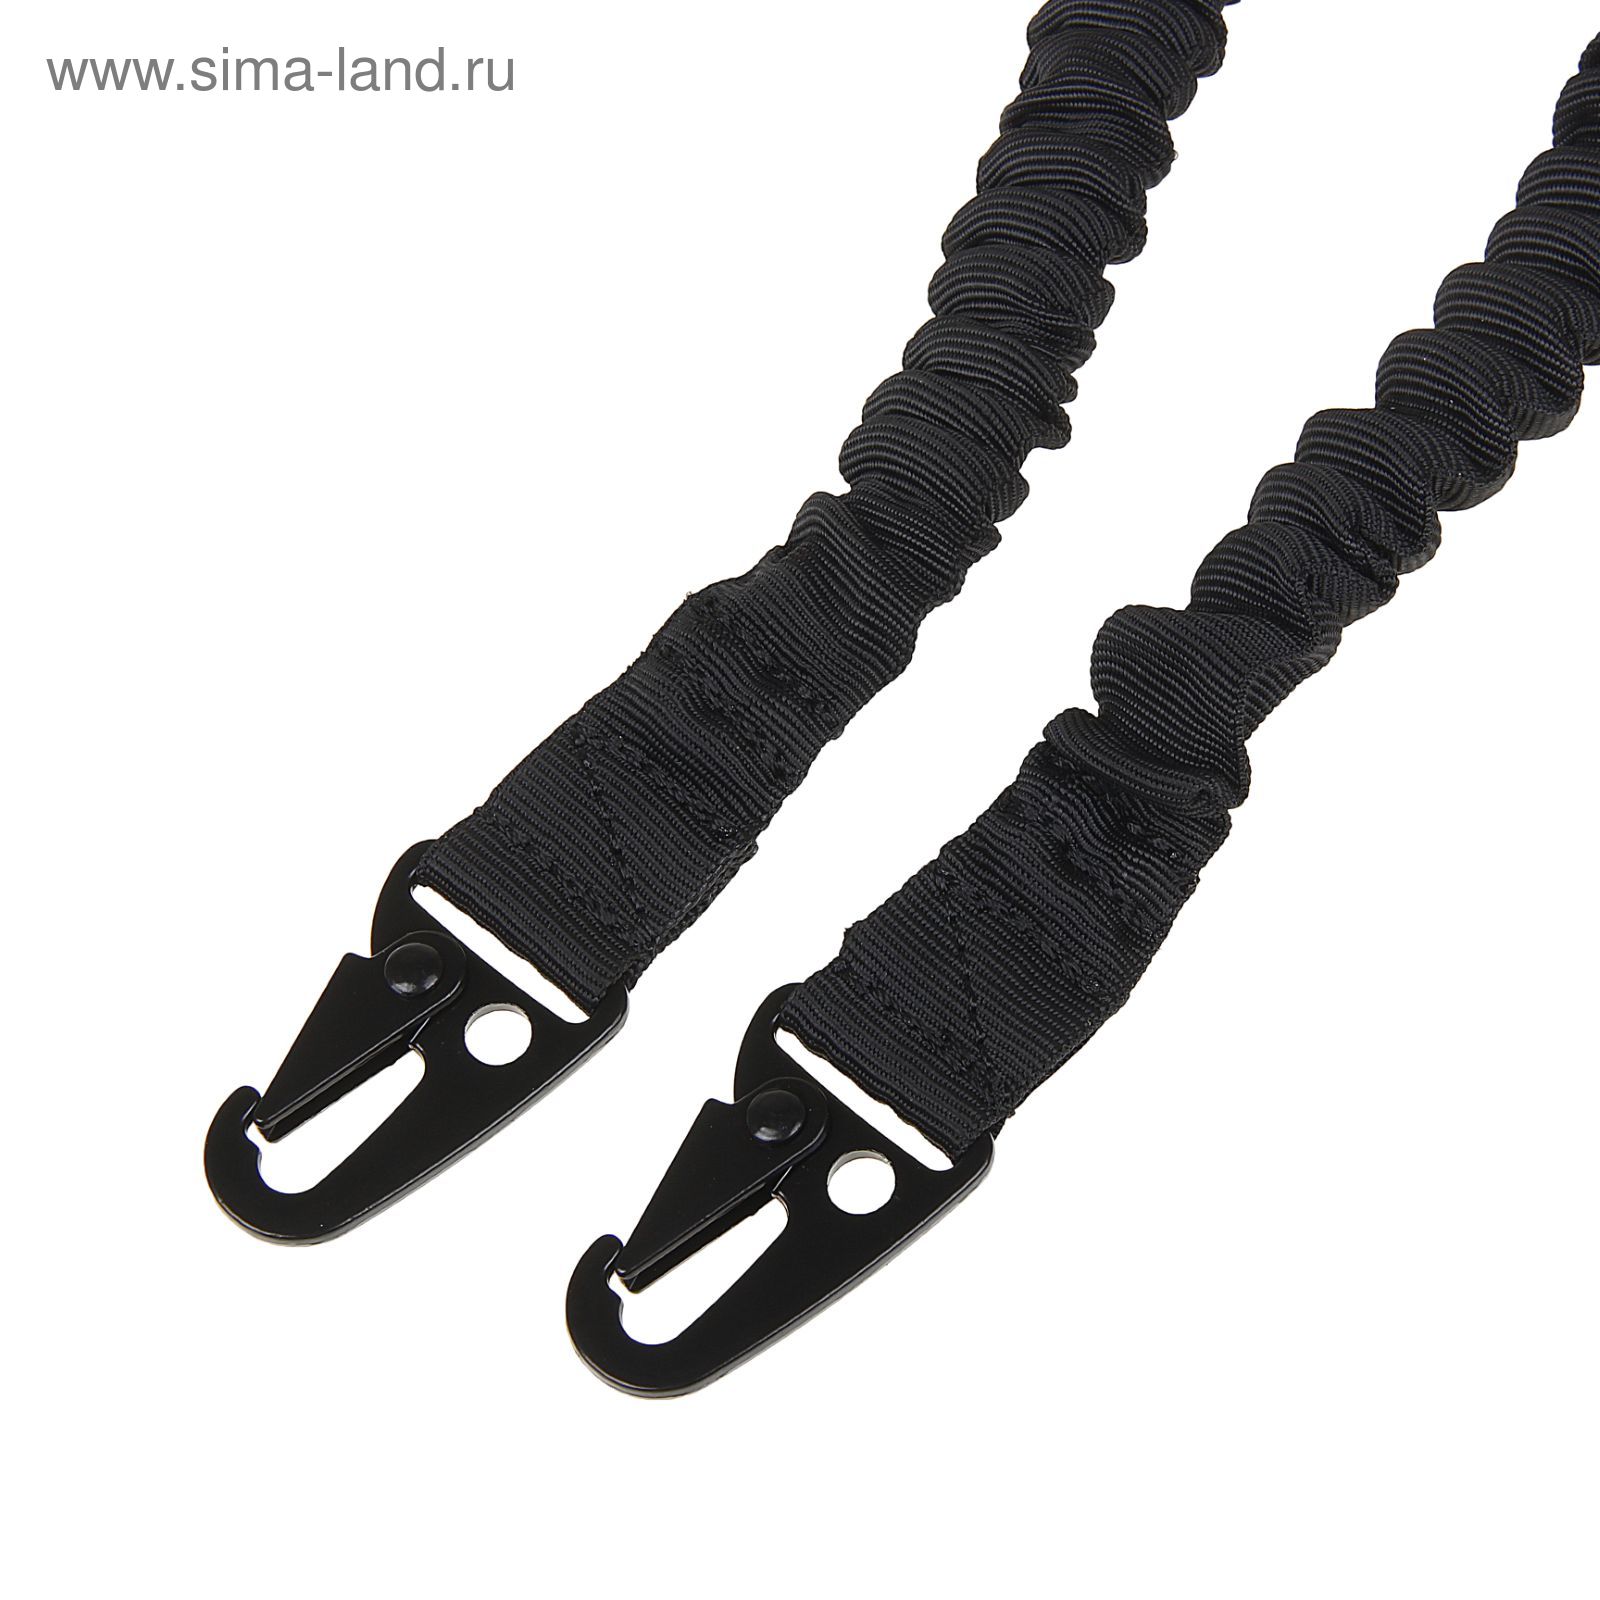 Ремень оружейный KINGRIN two point sling (Black) SL-08-BK